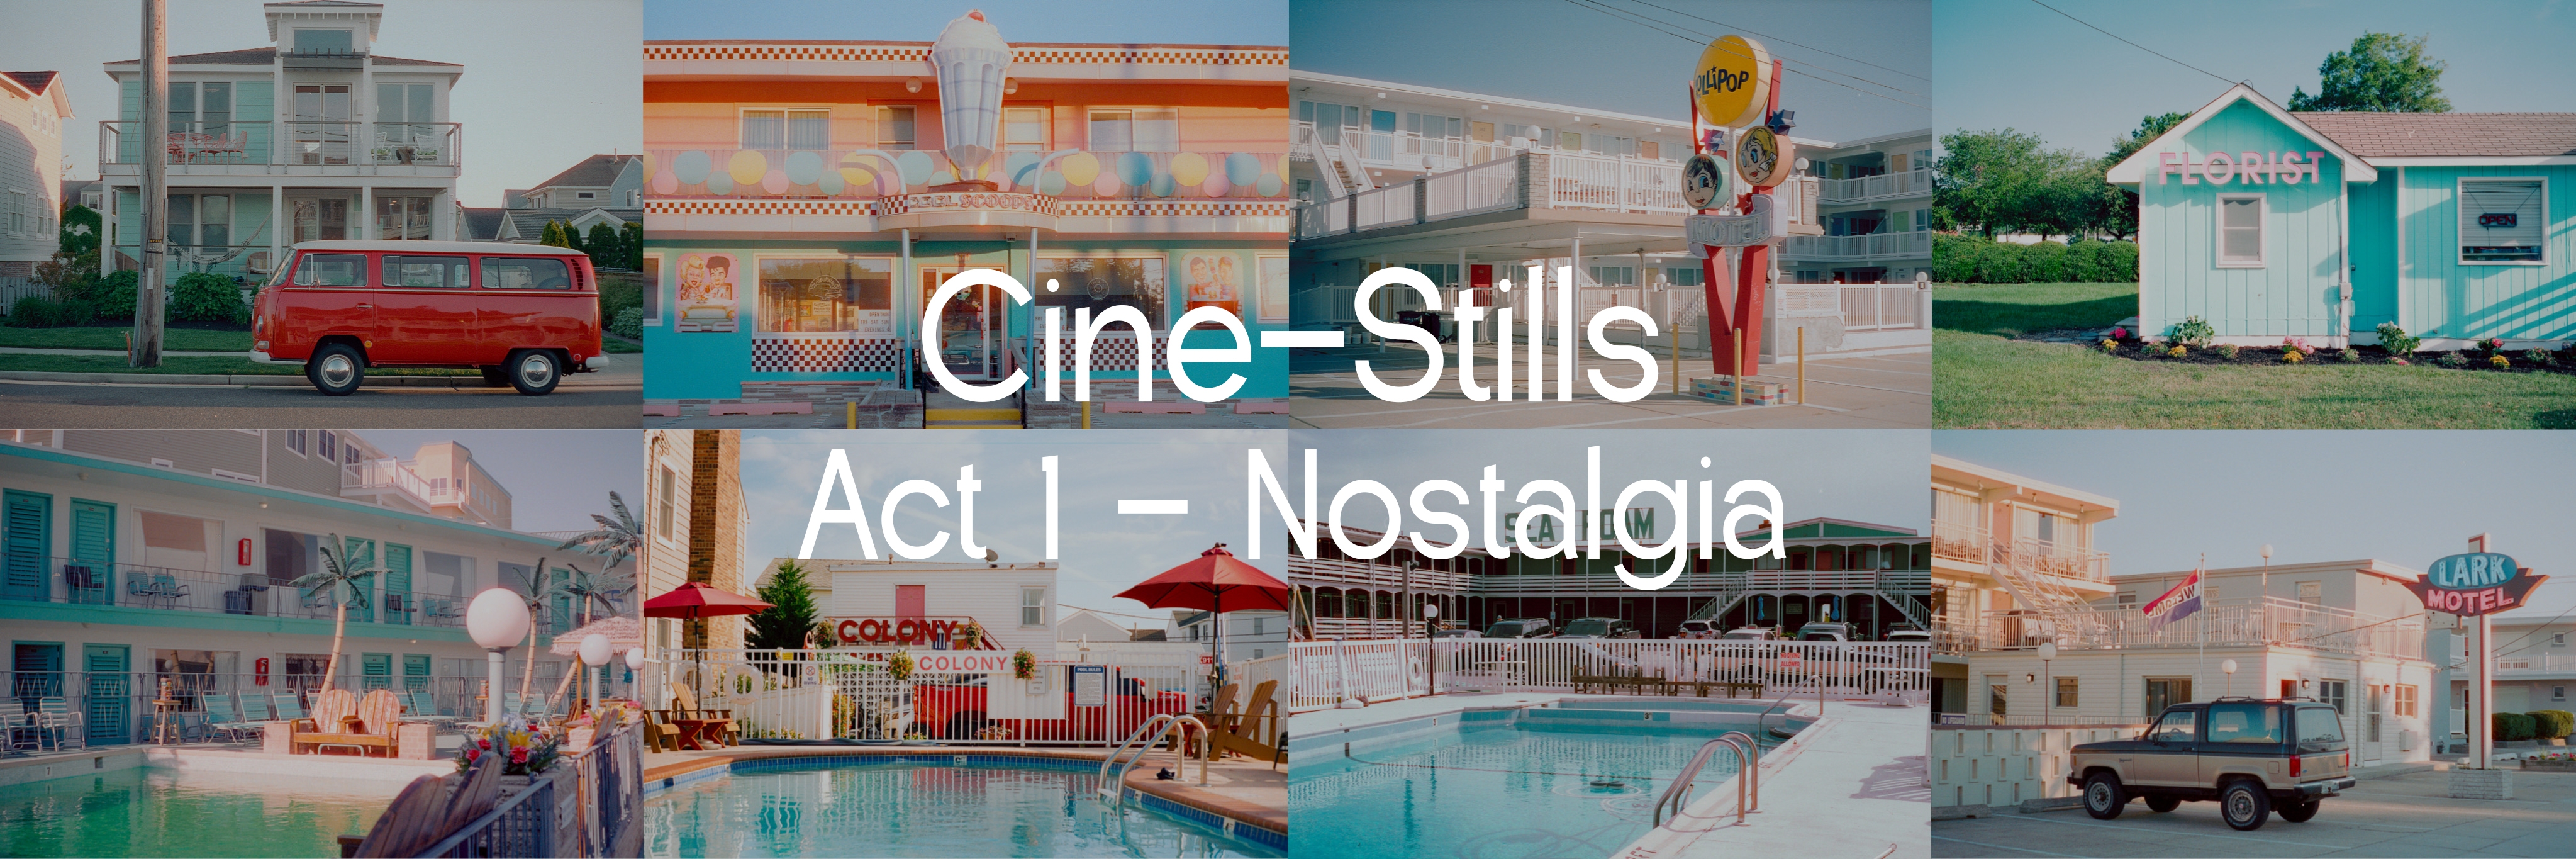 Cine-Stills: Act I- Nostalgia banner